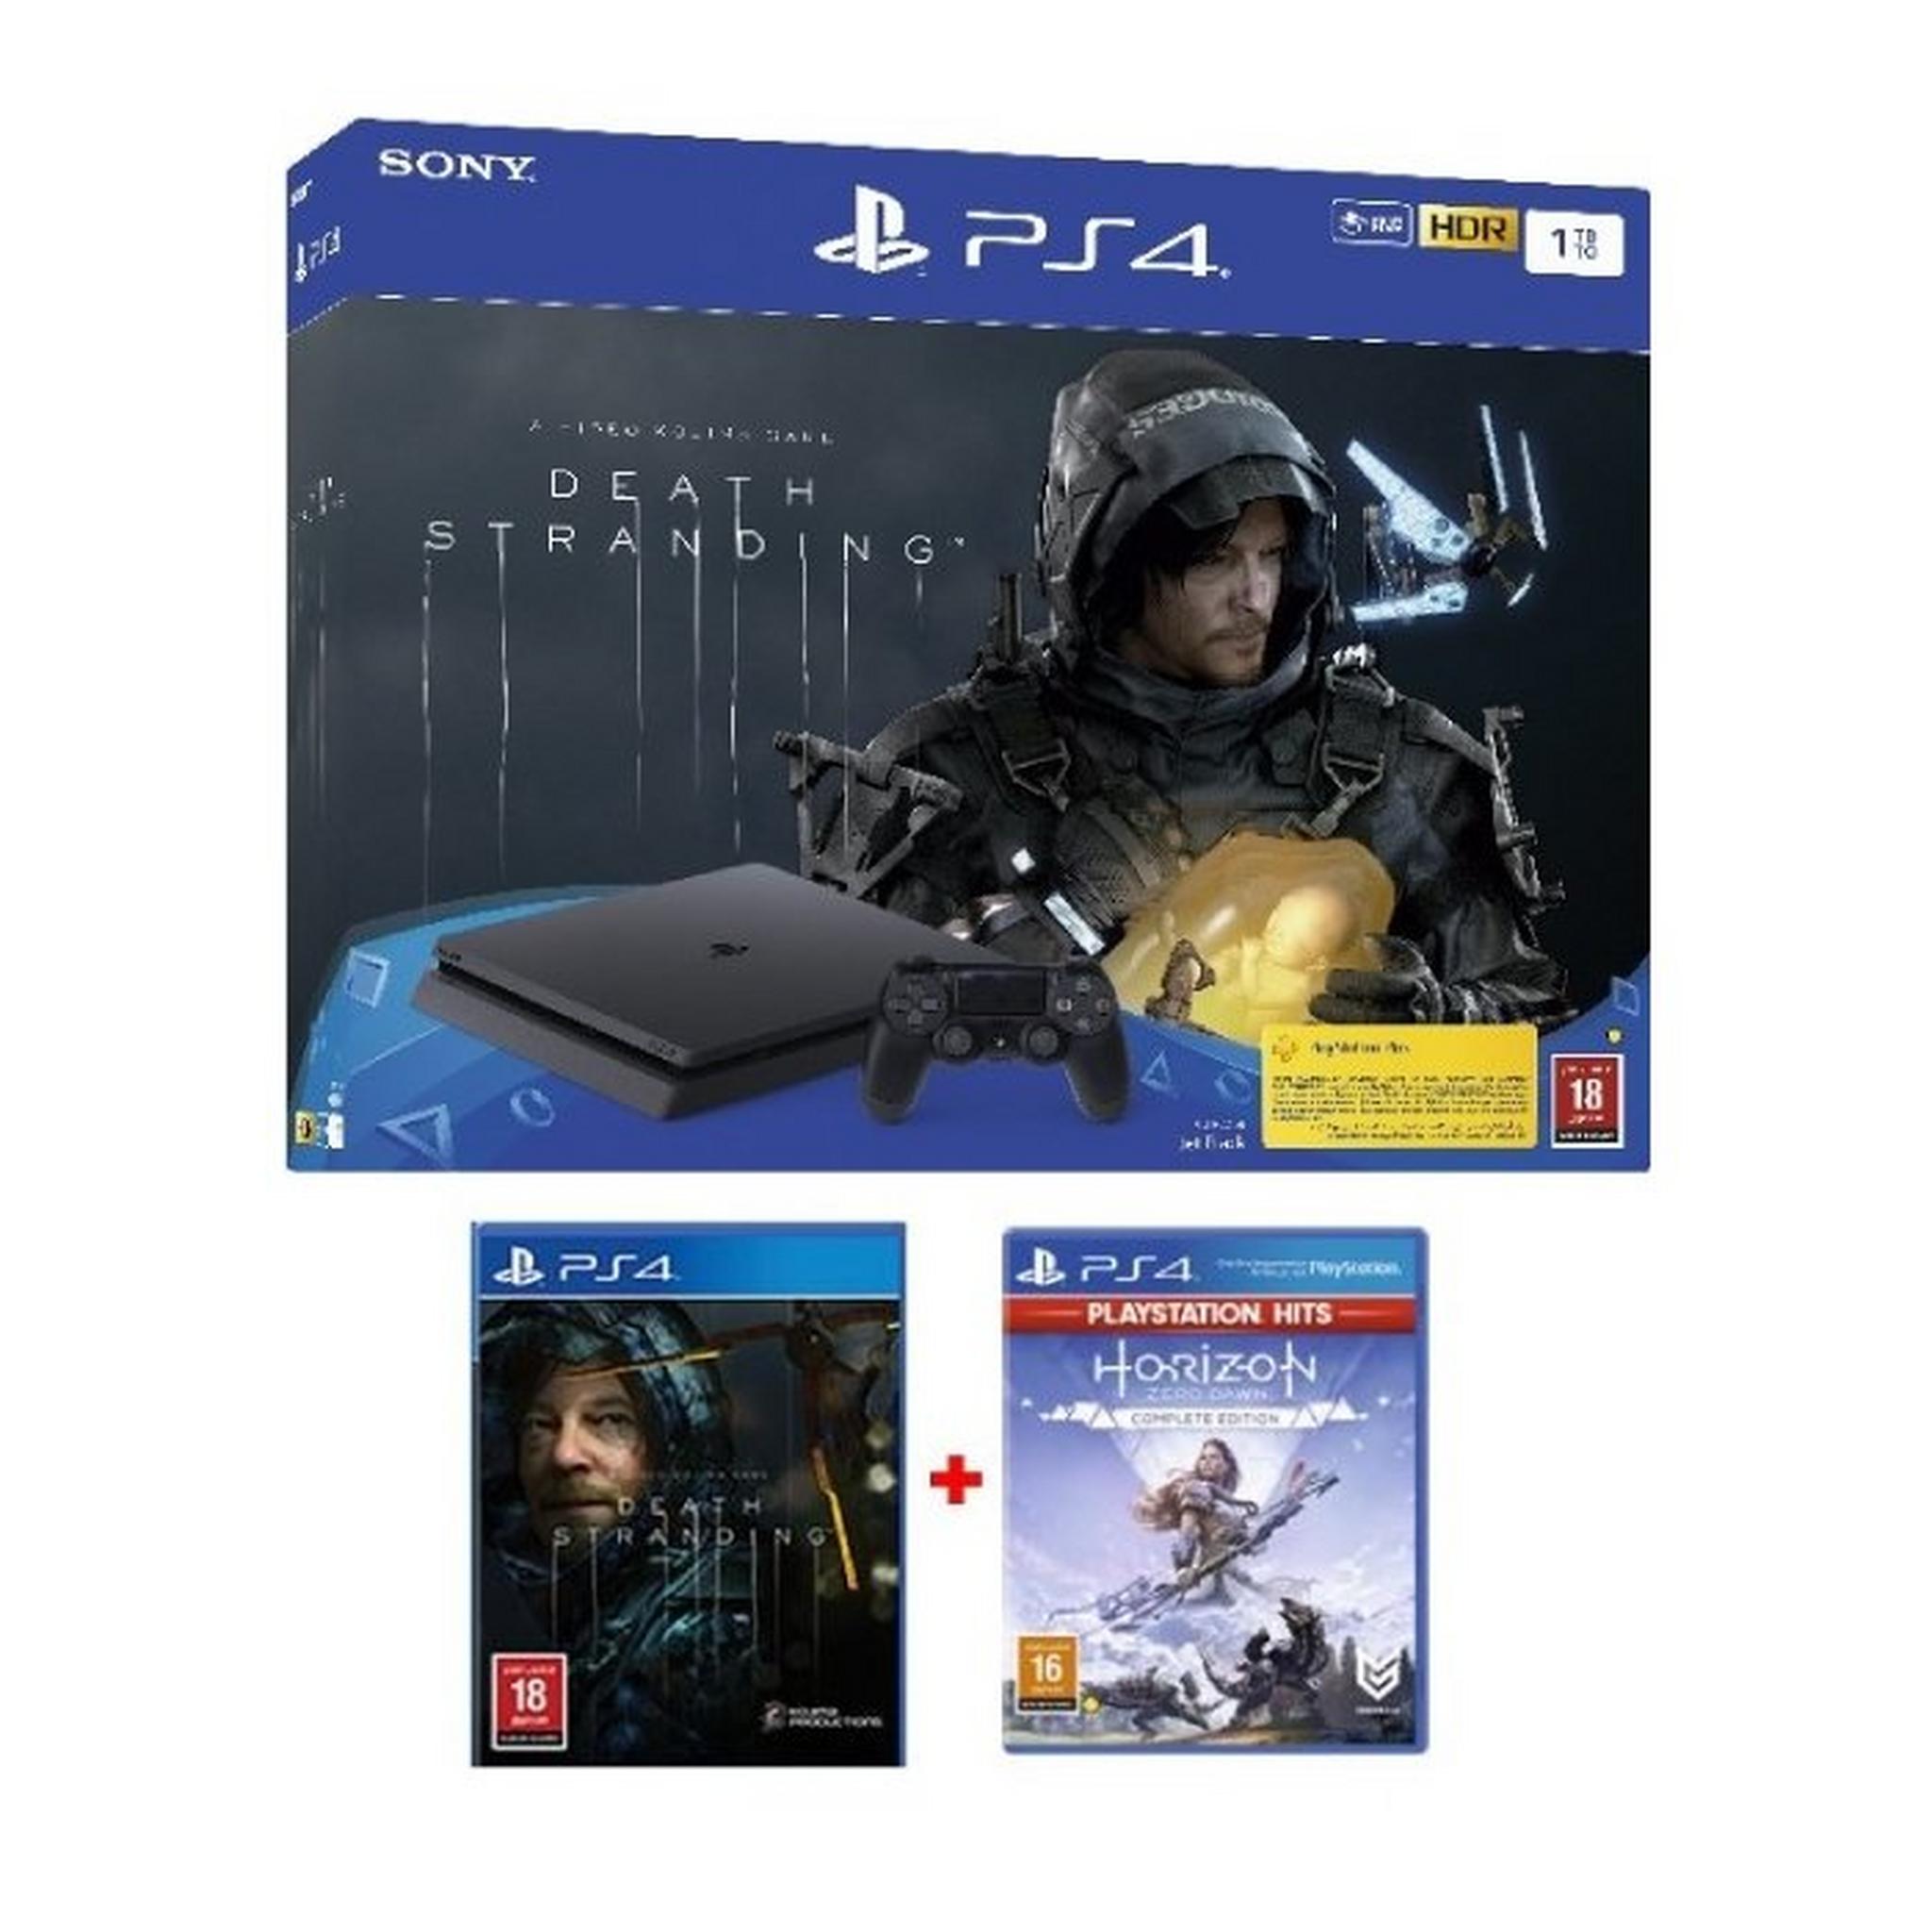 Sony PlayStation 4 Slim 1TB Console + Death Stranding & Horizon Zero Dawn Complete Edition Games